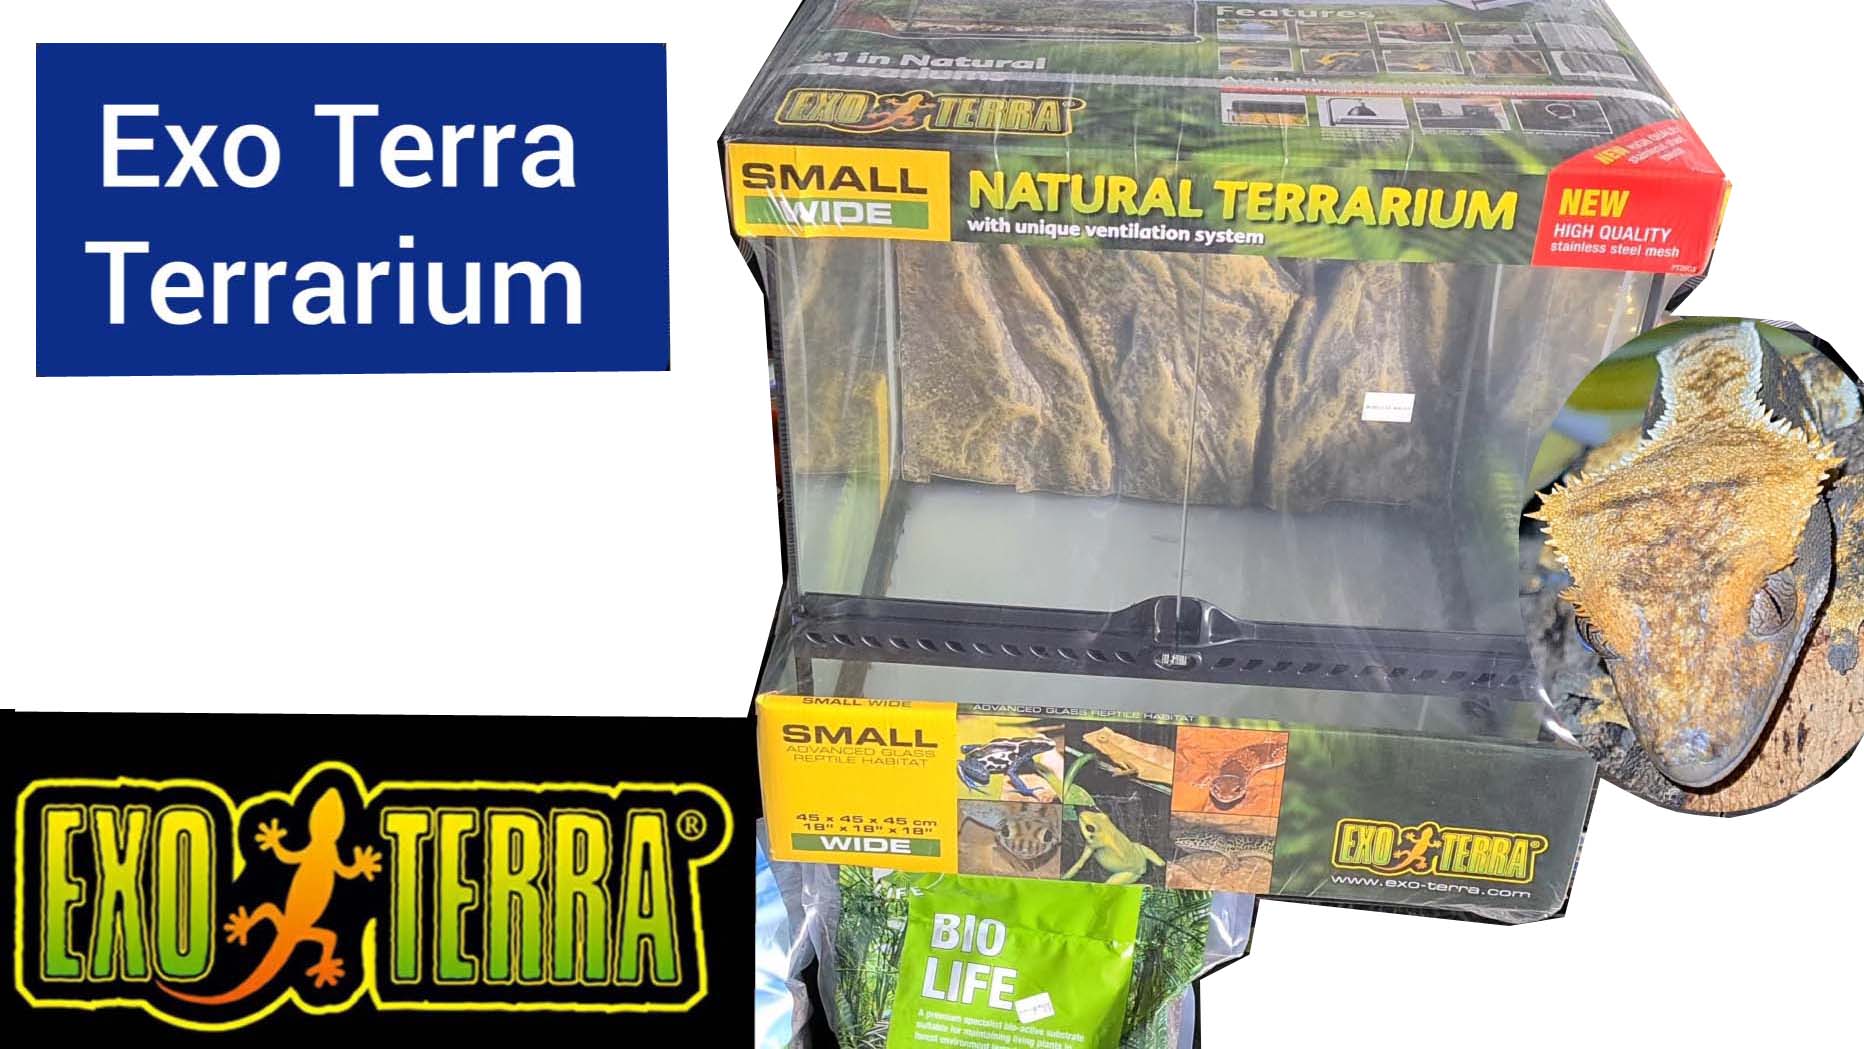 Exo Terra Terrarium 45 x 54 cm small Bio substrate Hydro balls tropical soil. Wayne's TerraWorld